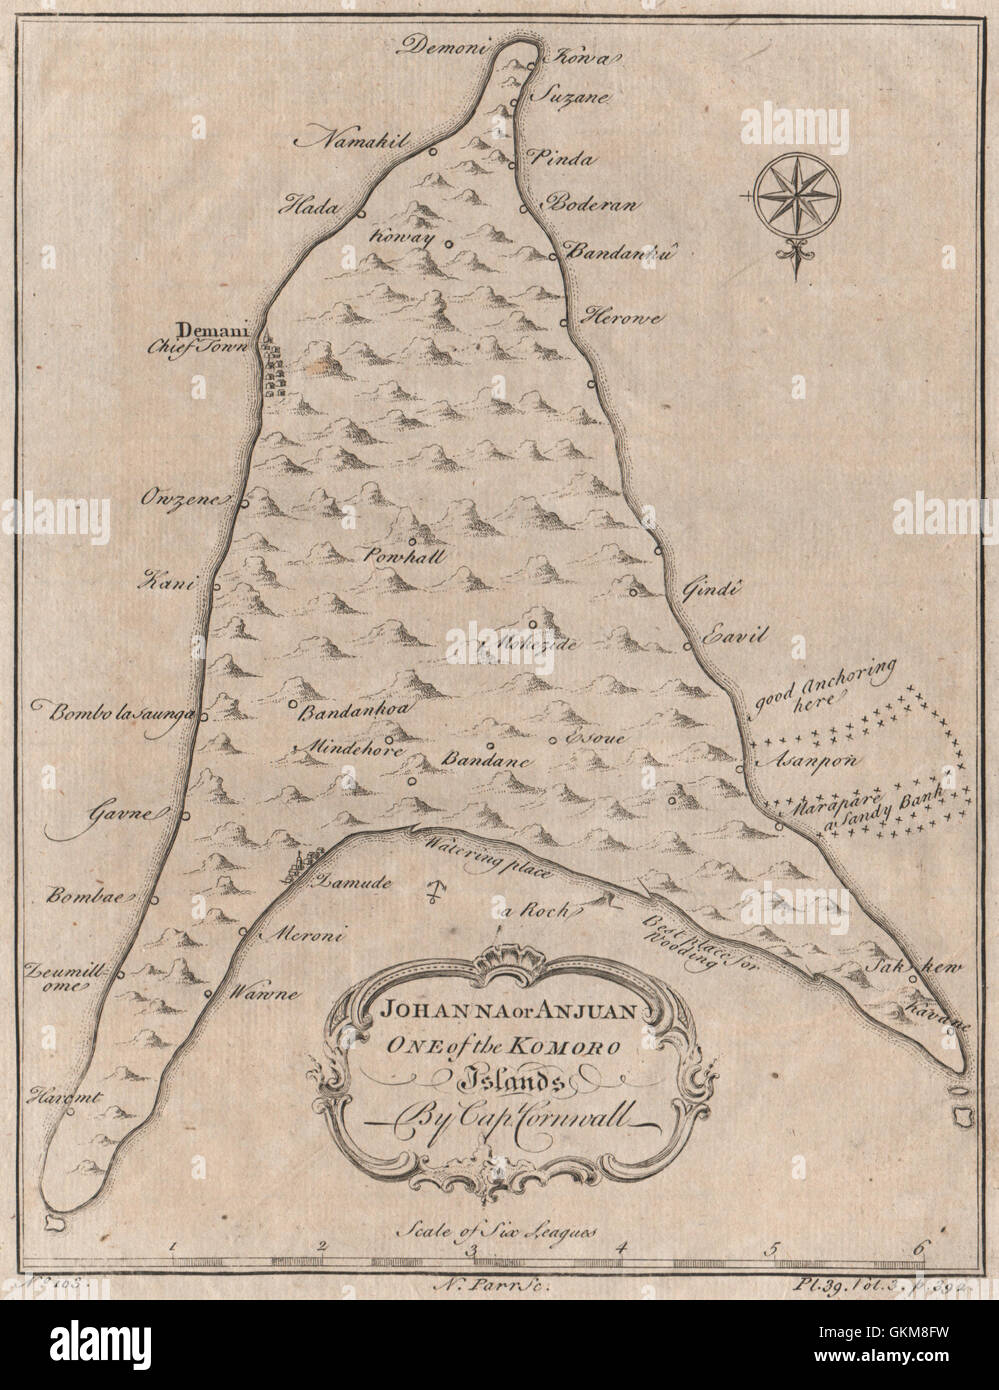 INSEL ANJOUAN, KOMOREN. "Johanna oder Anjuan, einer der Inseln Komoro" 1746-Karte Stockfoto